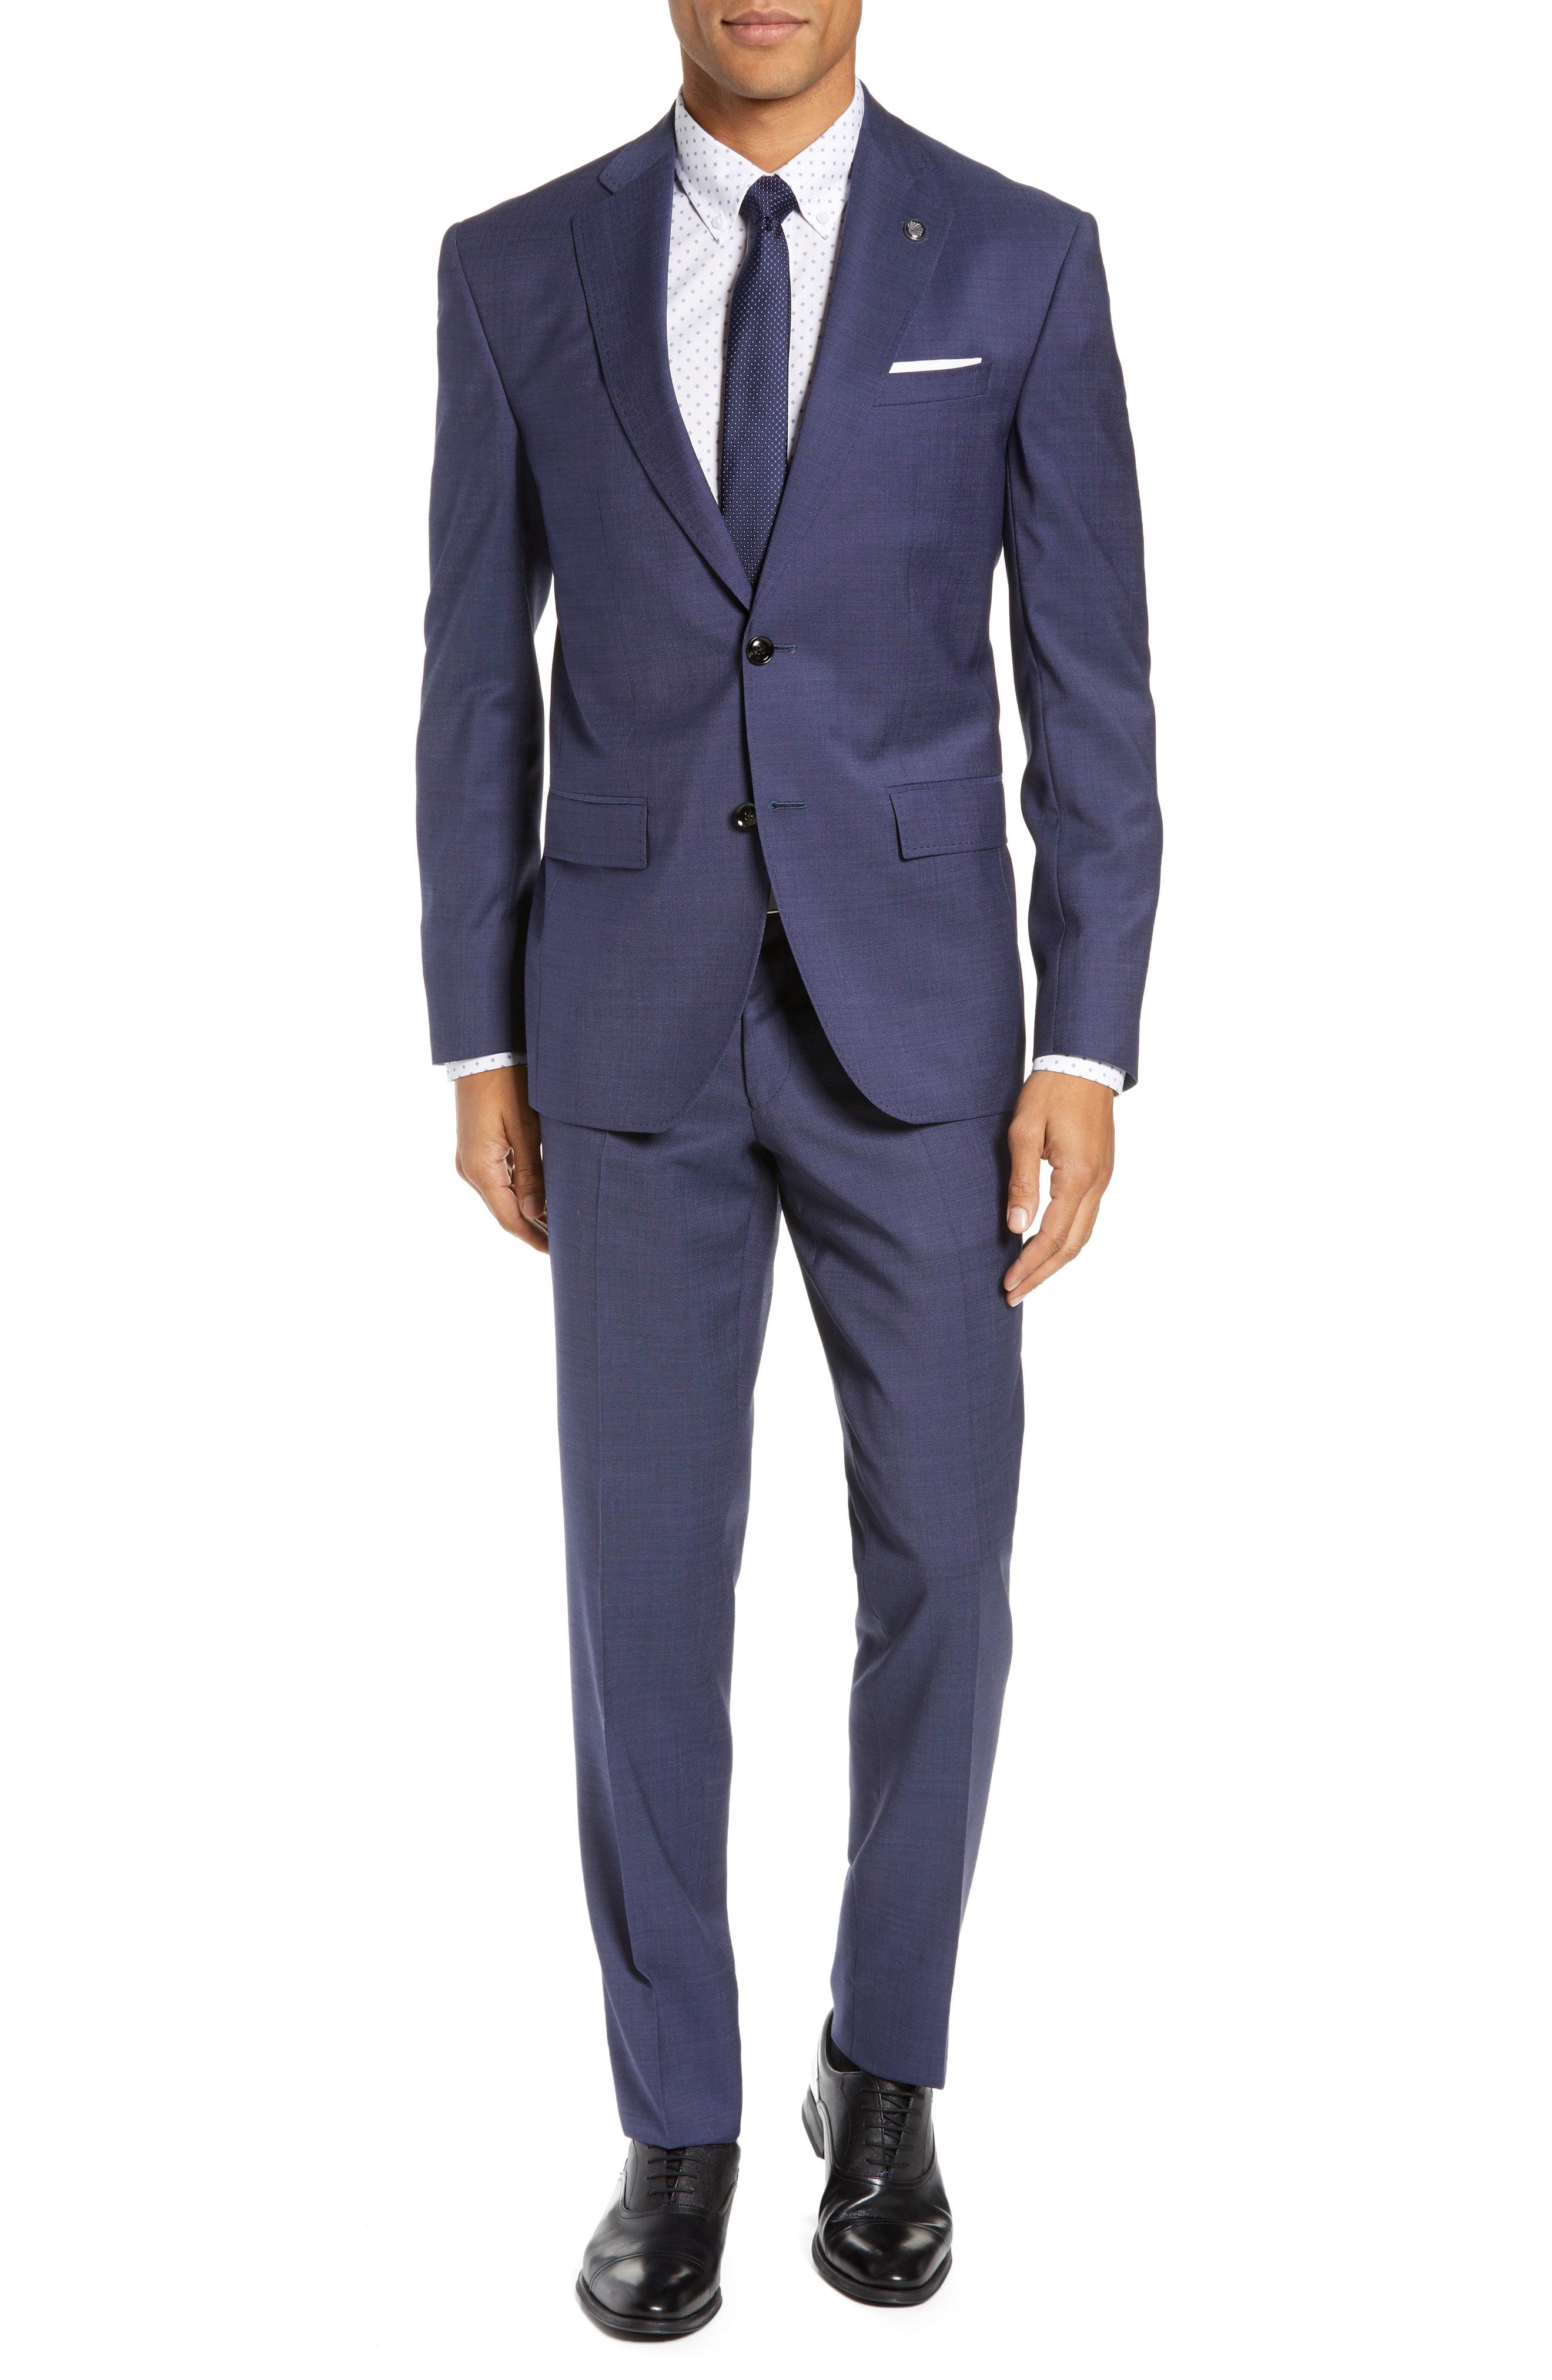 Lyst - Ted Baker Roger Slim Fit Solid Wool Suit in Blue for Men